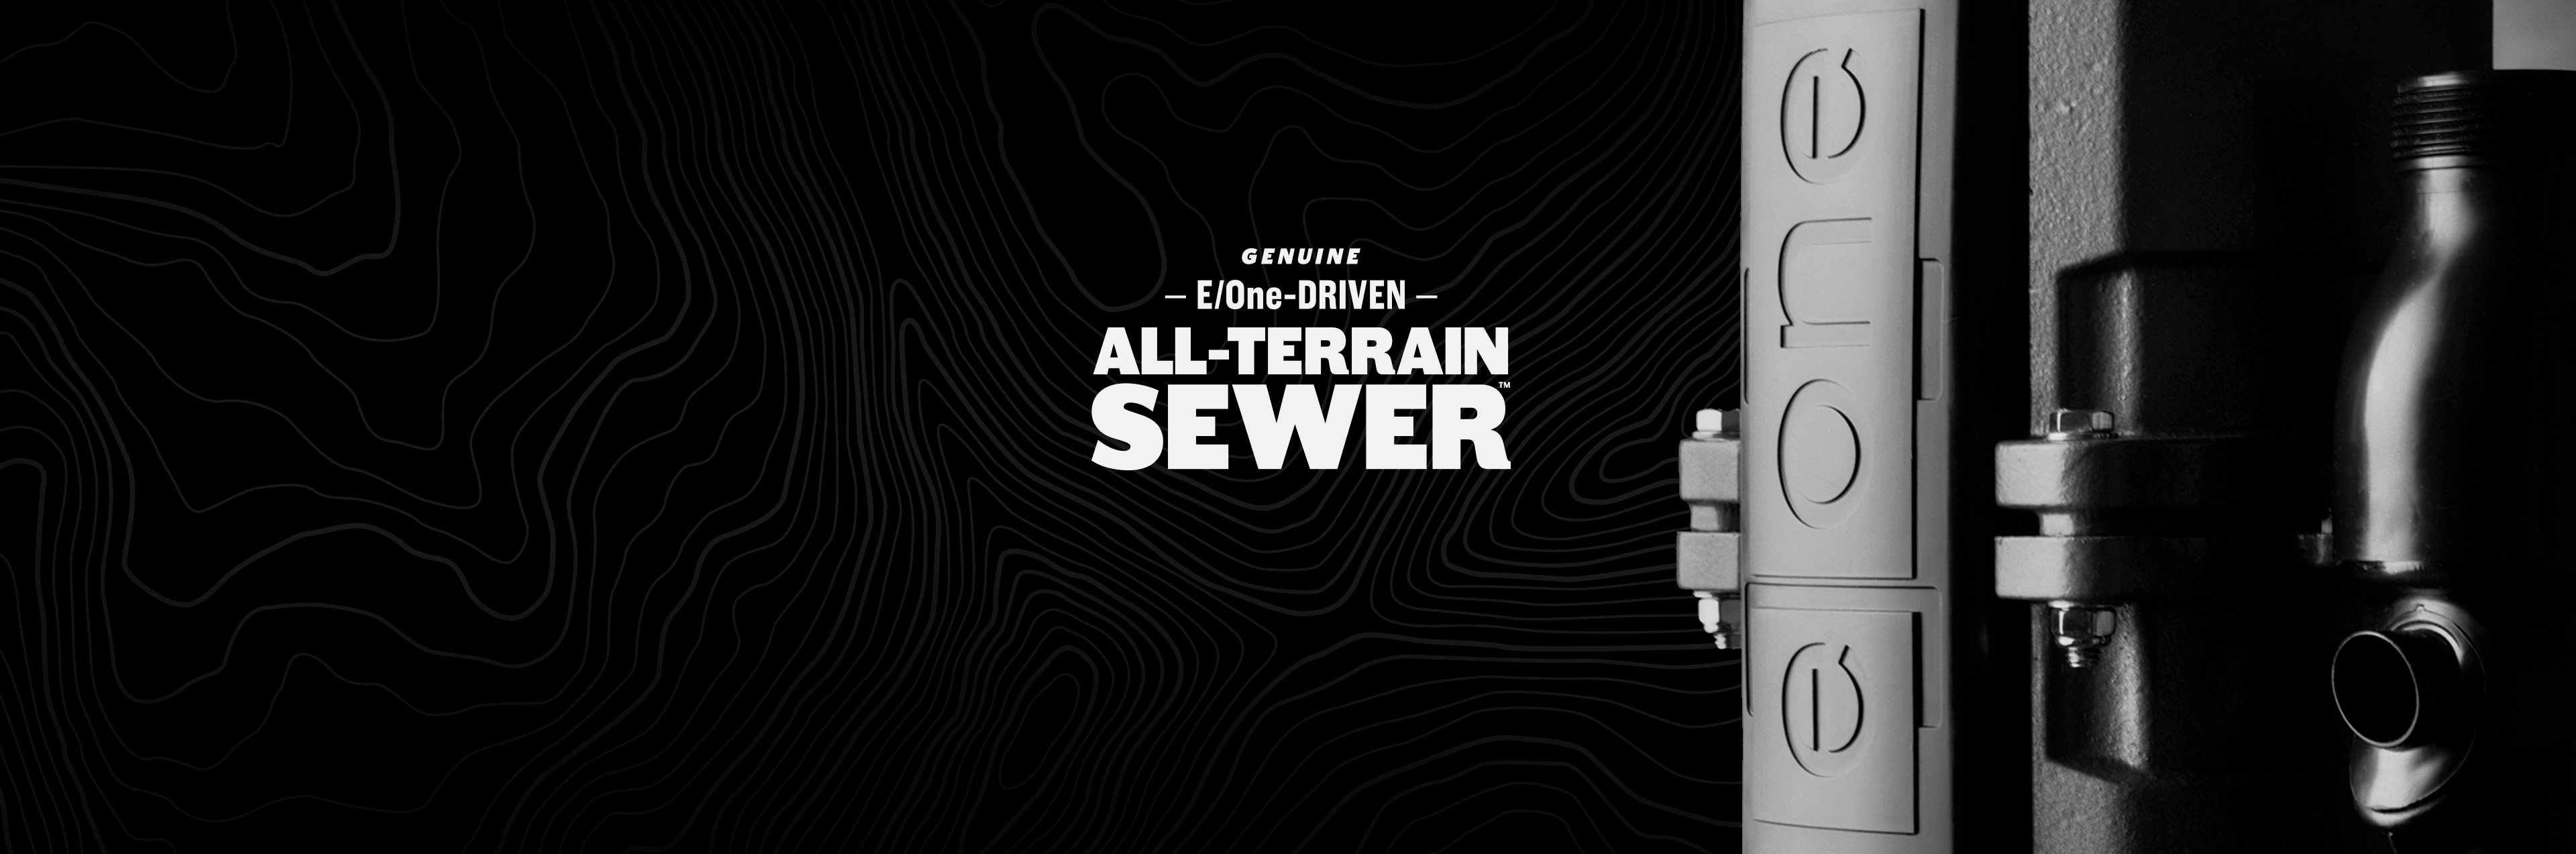 All Terrain Sewer